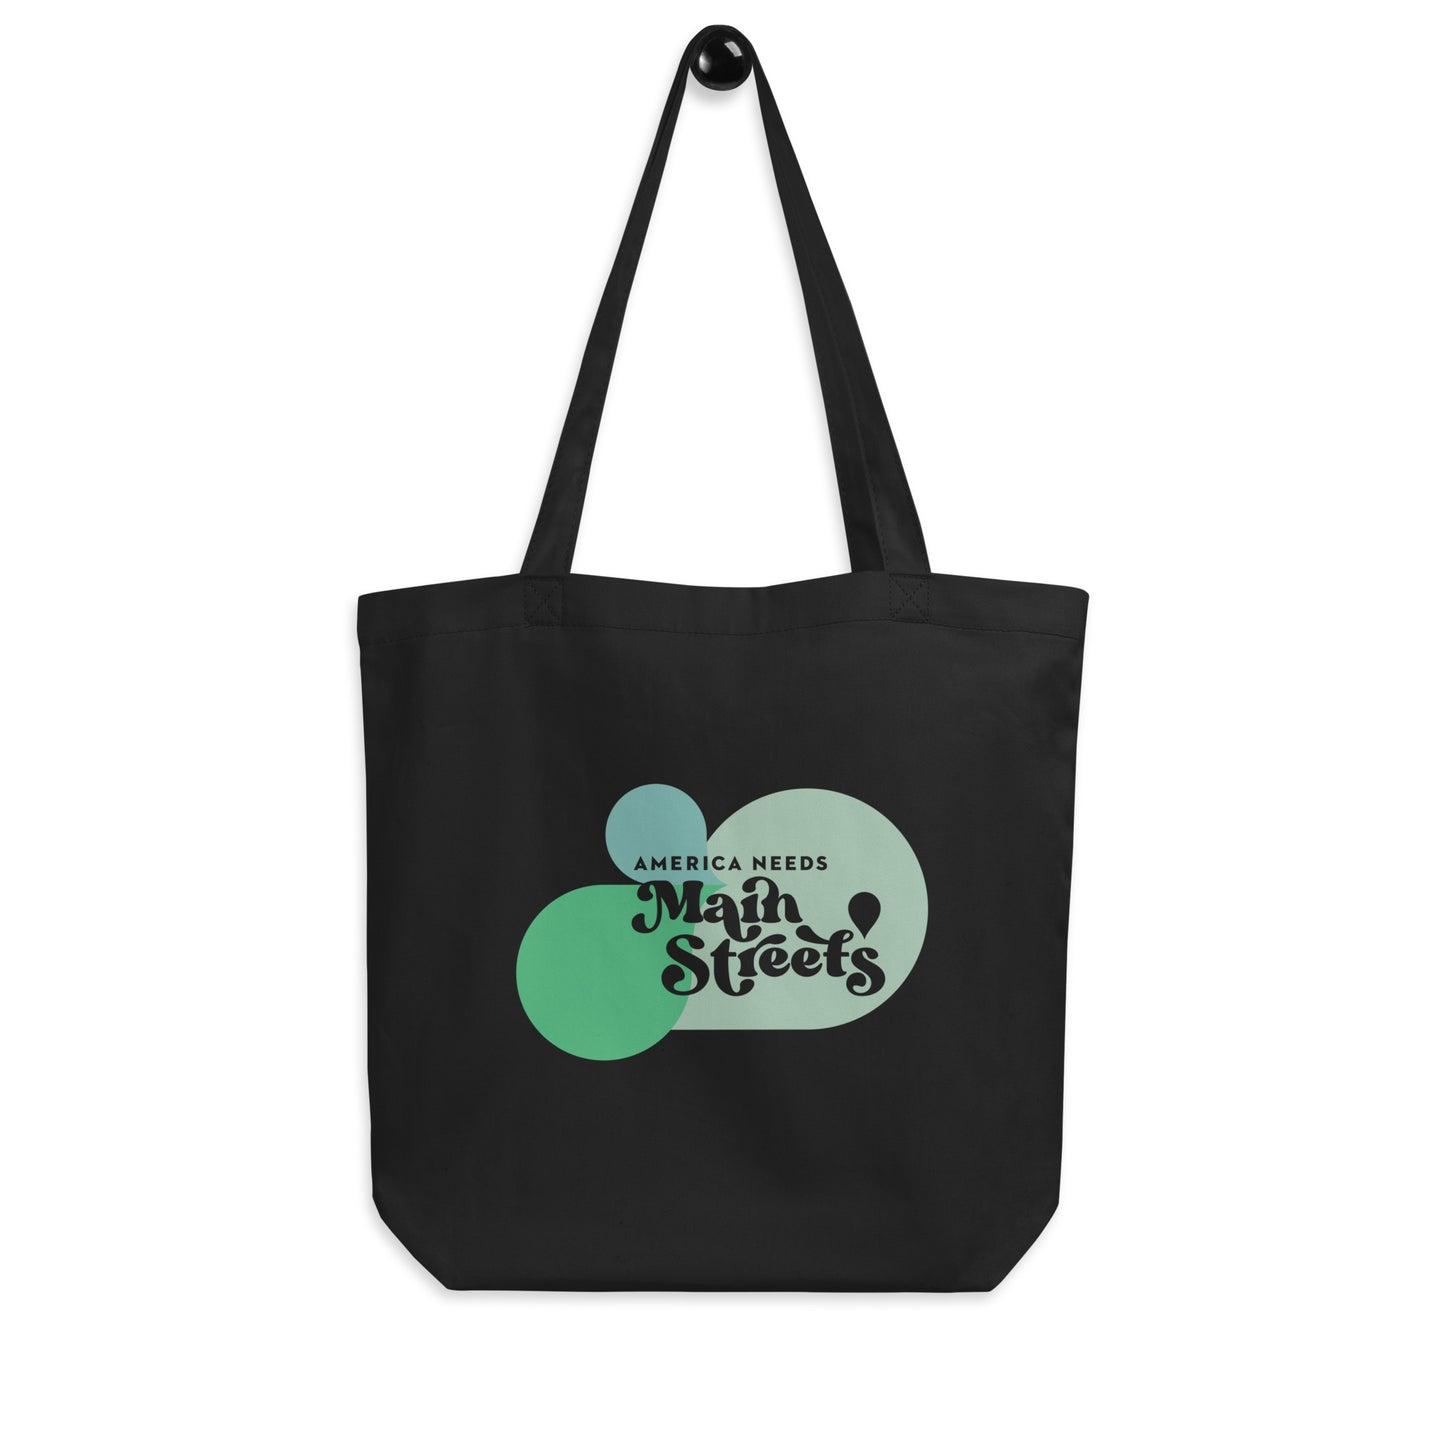 "America Needs Main Streets" Green Eco Tote Bag